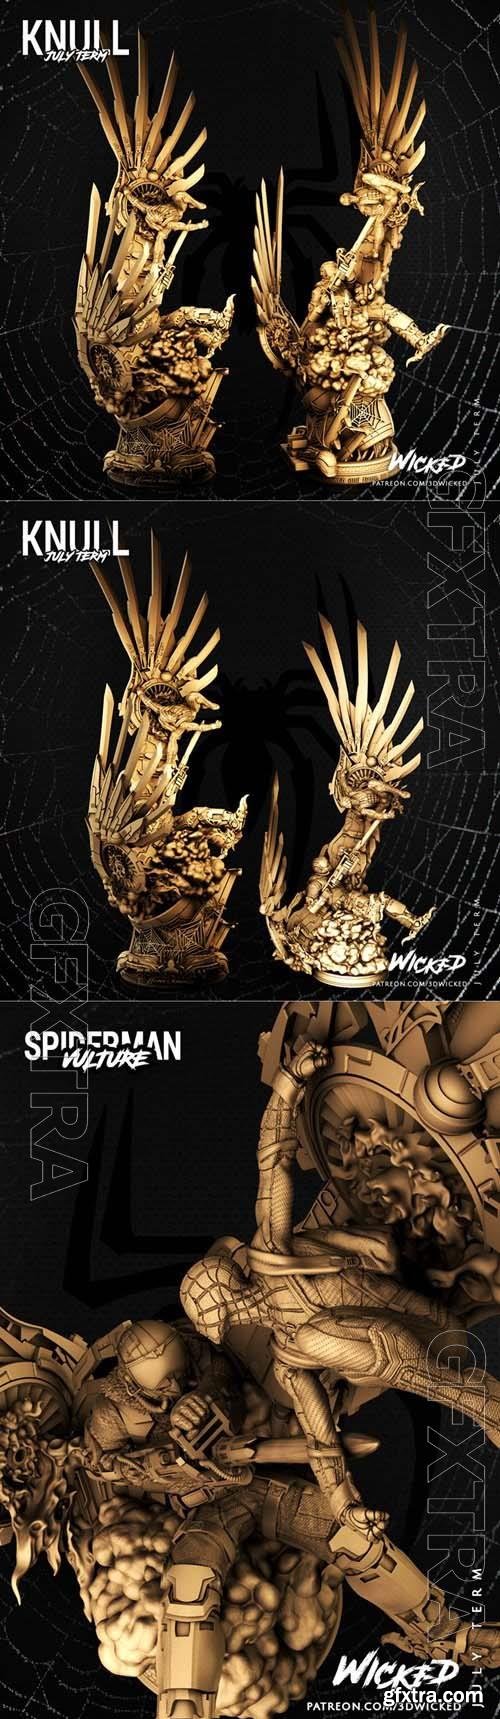 Wicked - Vulture vs Spiderman Diorama 3D Print